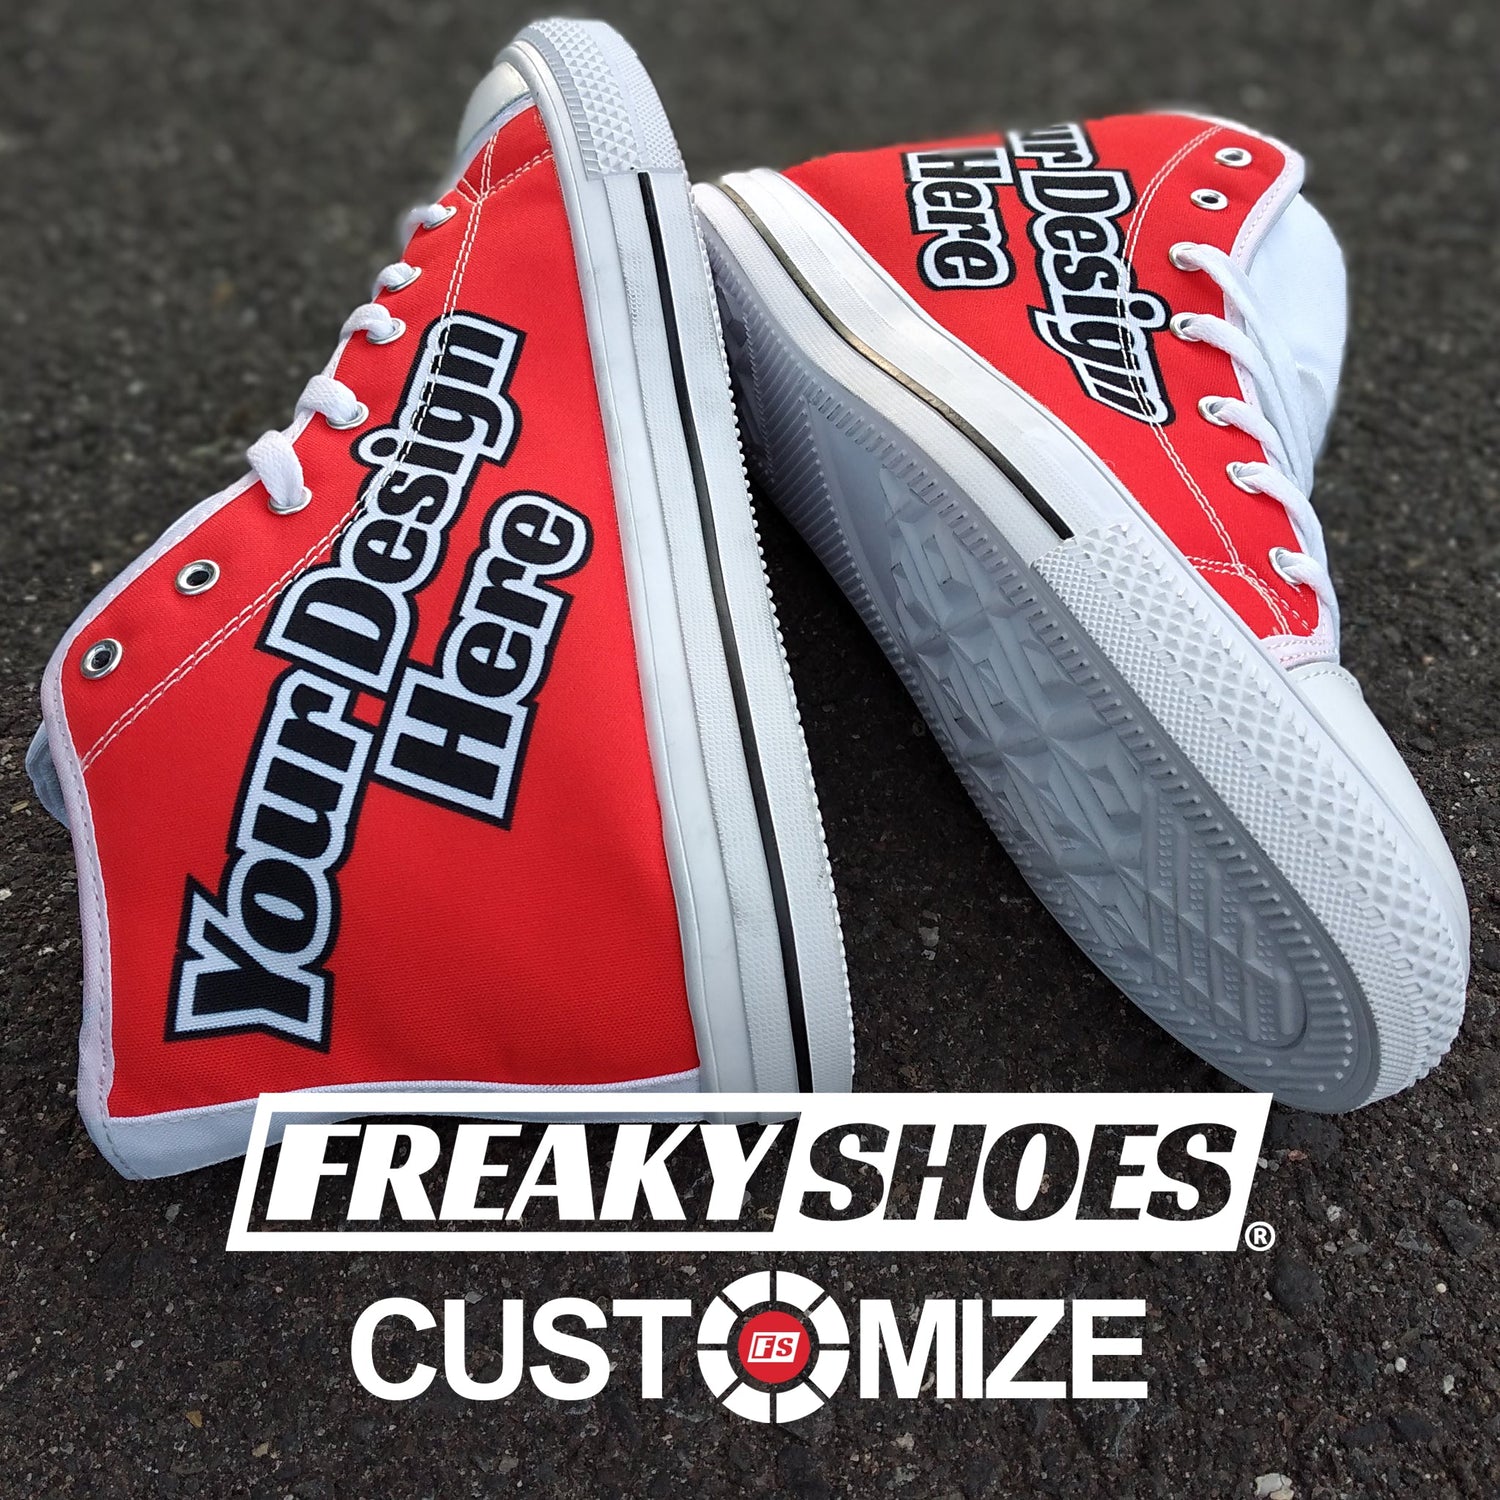 customs #customized #custom #customise #customizedshoes #customize